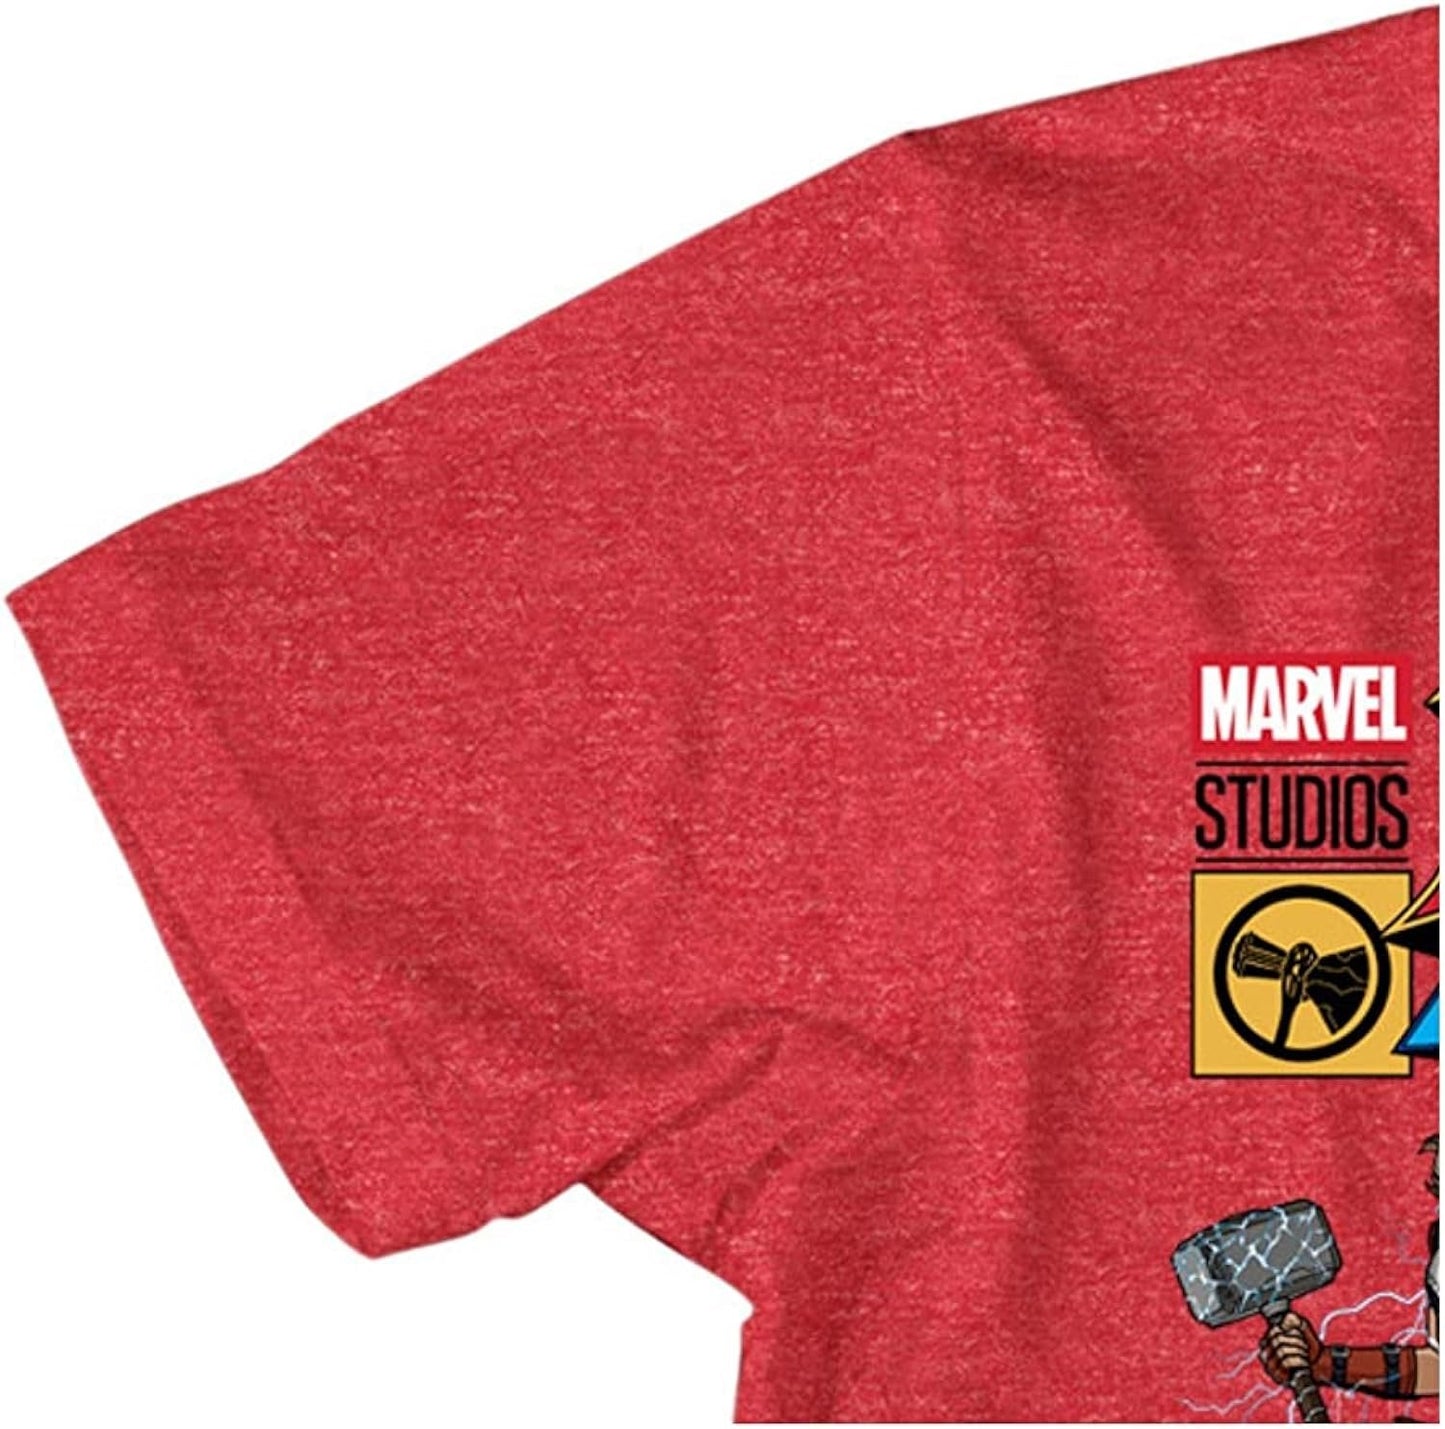 Marvel Boys Thor T-Shirt- Love and Thunder Thor T-Shirt